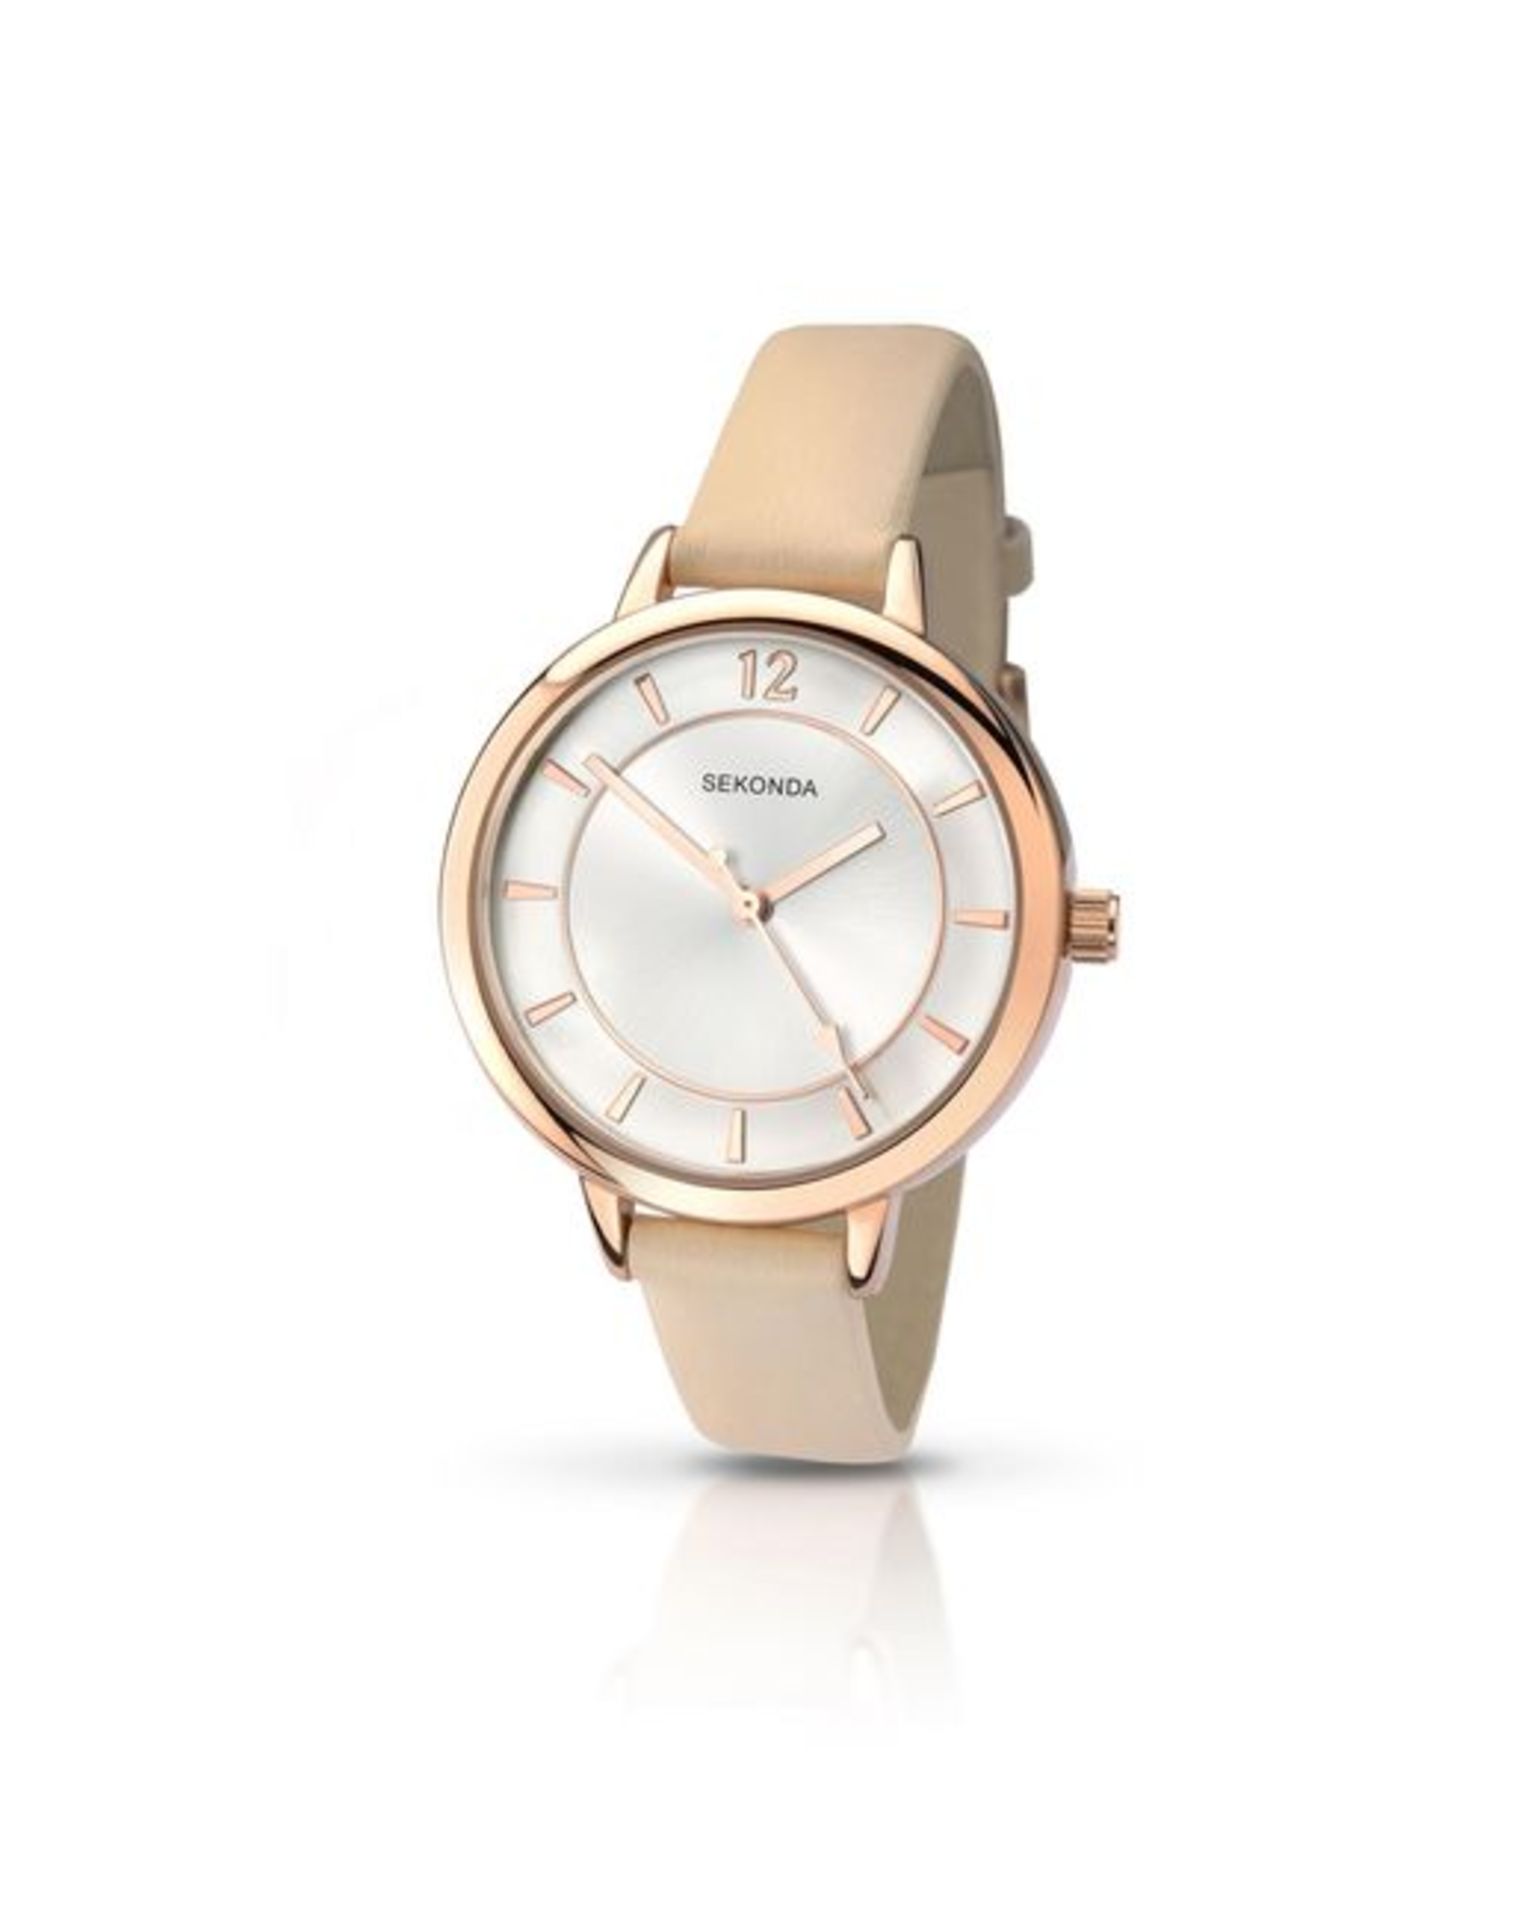 Brand New Sekonda Women's Quartz Watch with Analogue Display 2137.28